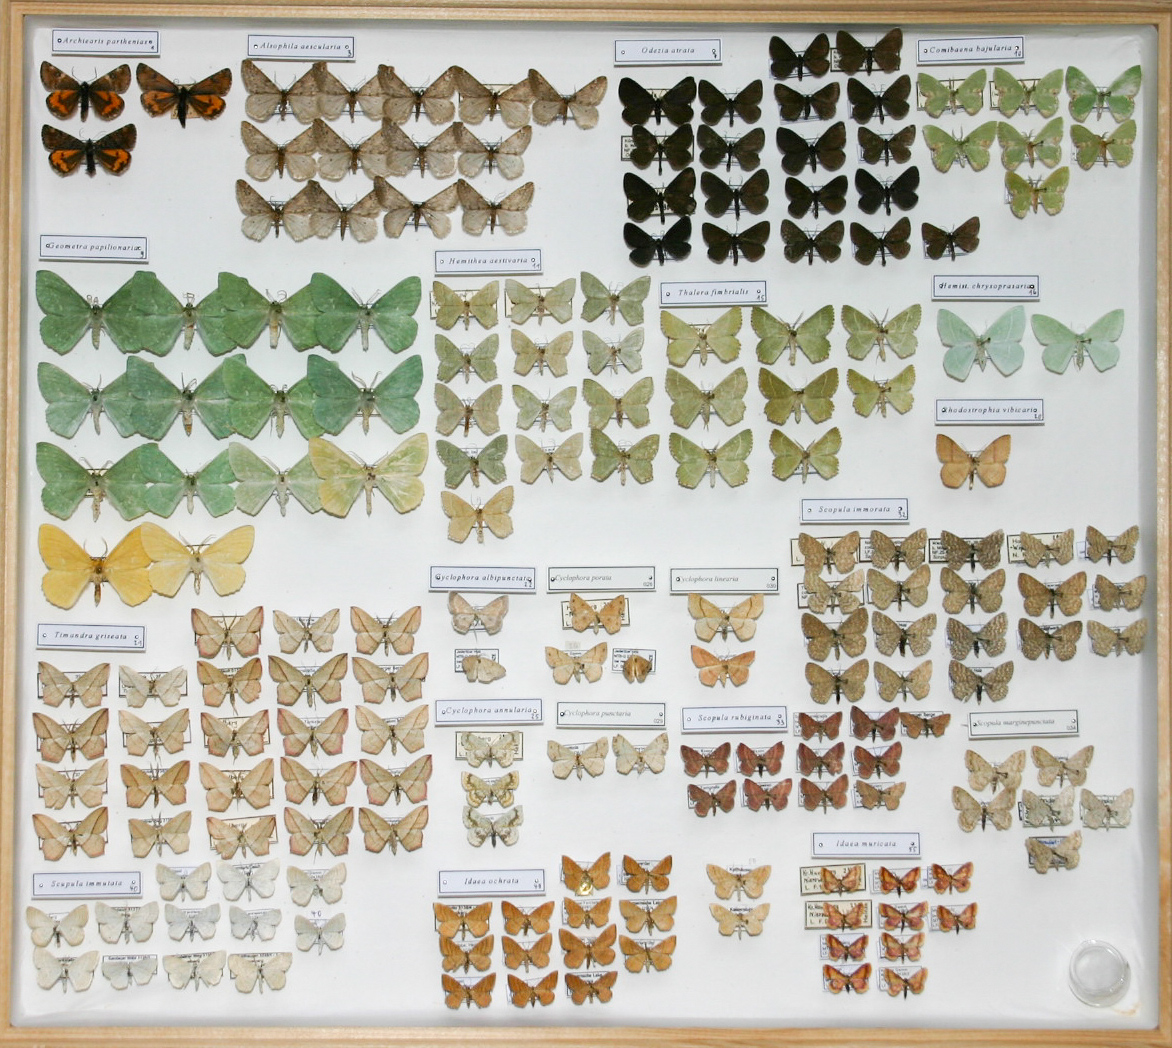 Schmetterlingssammlung Bernd Heinze, Havelberg